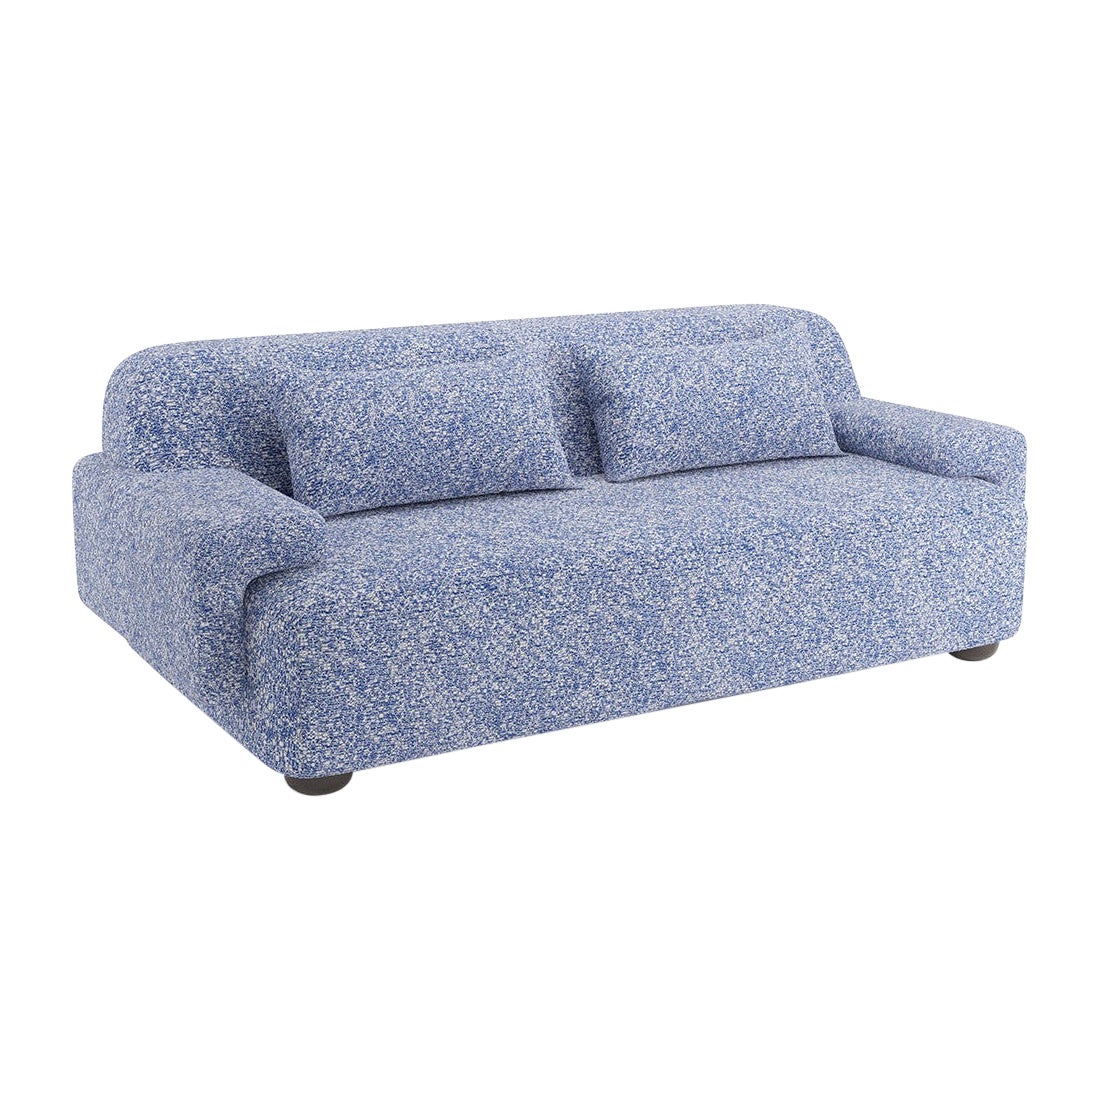 Popus Editions Lena 3 Seater Sofa in Ocean Zanzi Linen & Wool Blend Fabric